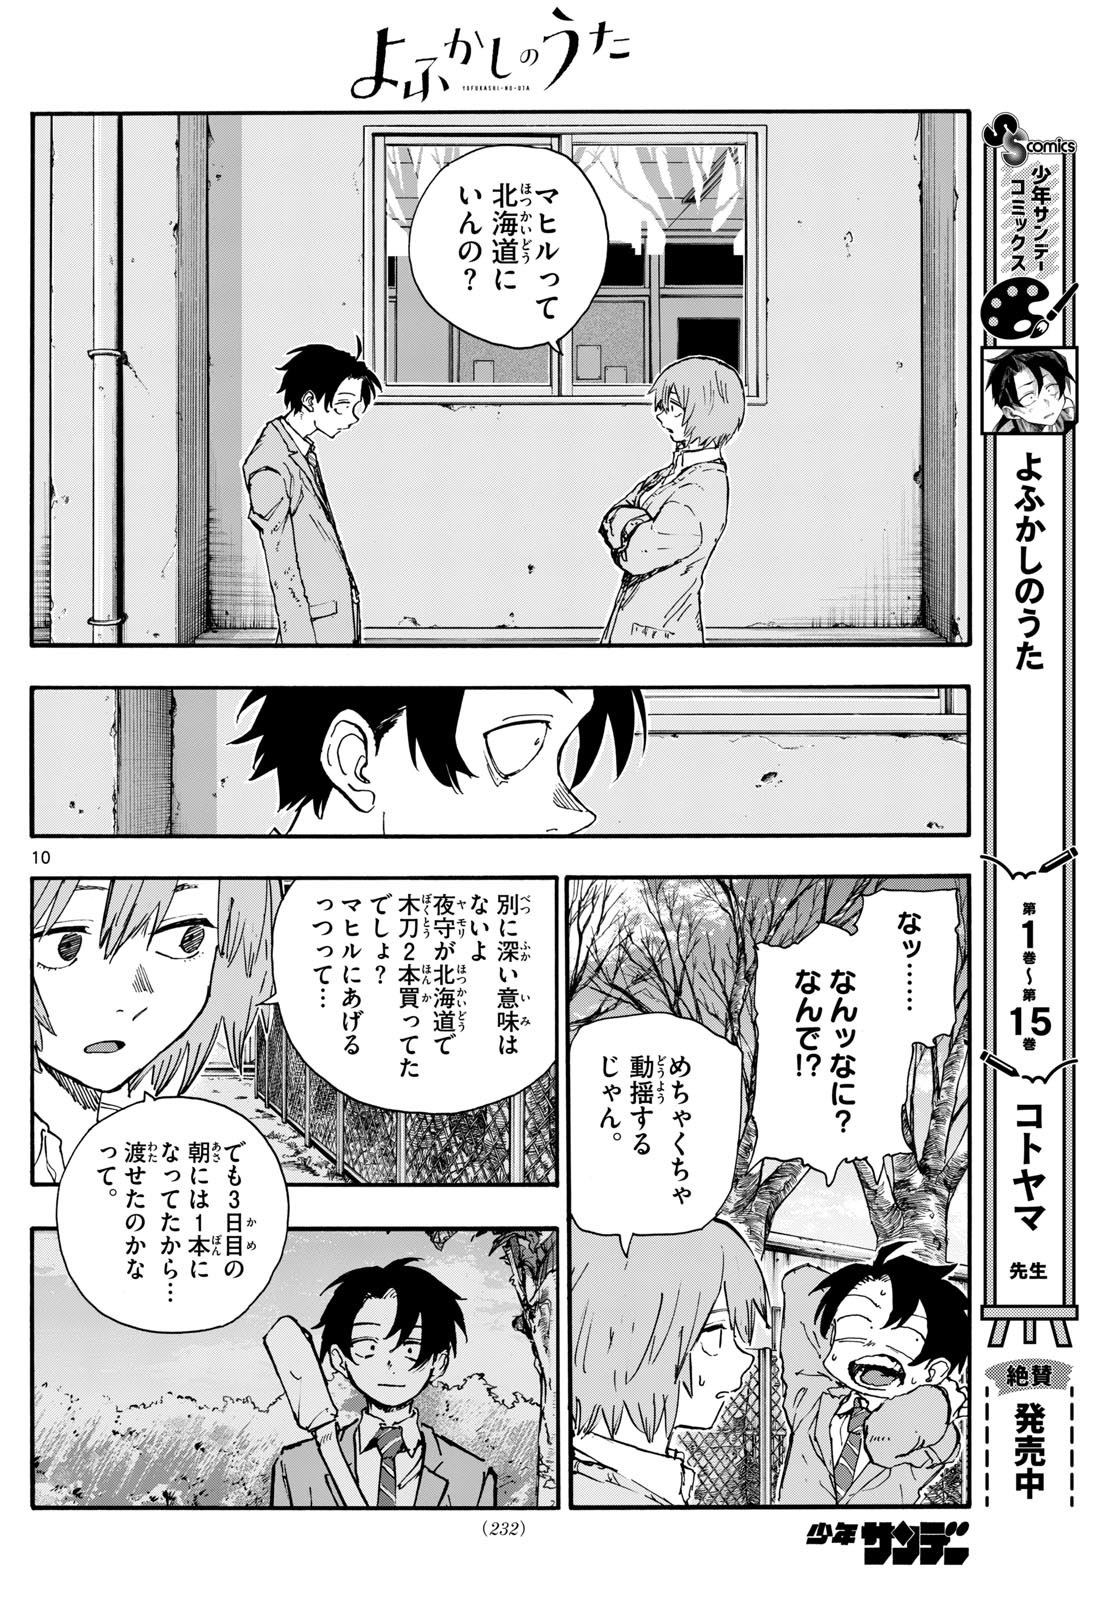 DISC] Yofukashi no Uta - Chapter 173 (/a/nonymous) : r/manga